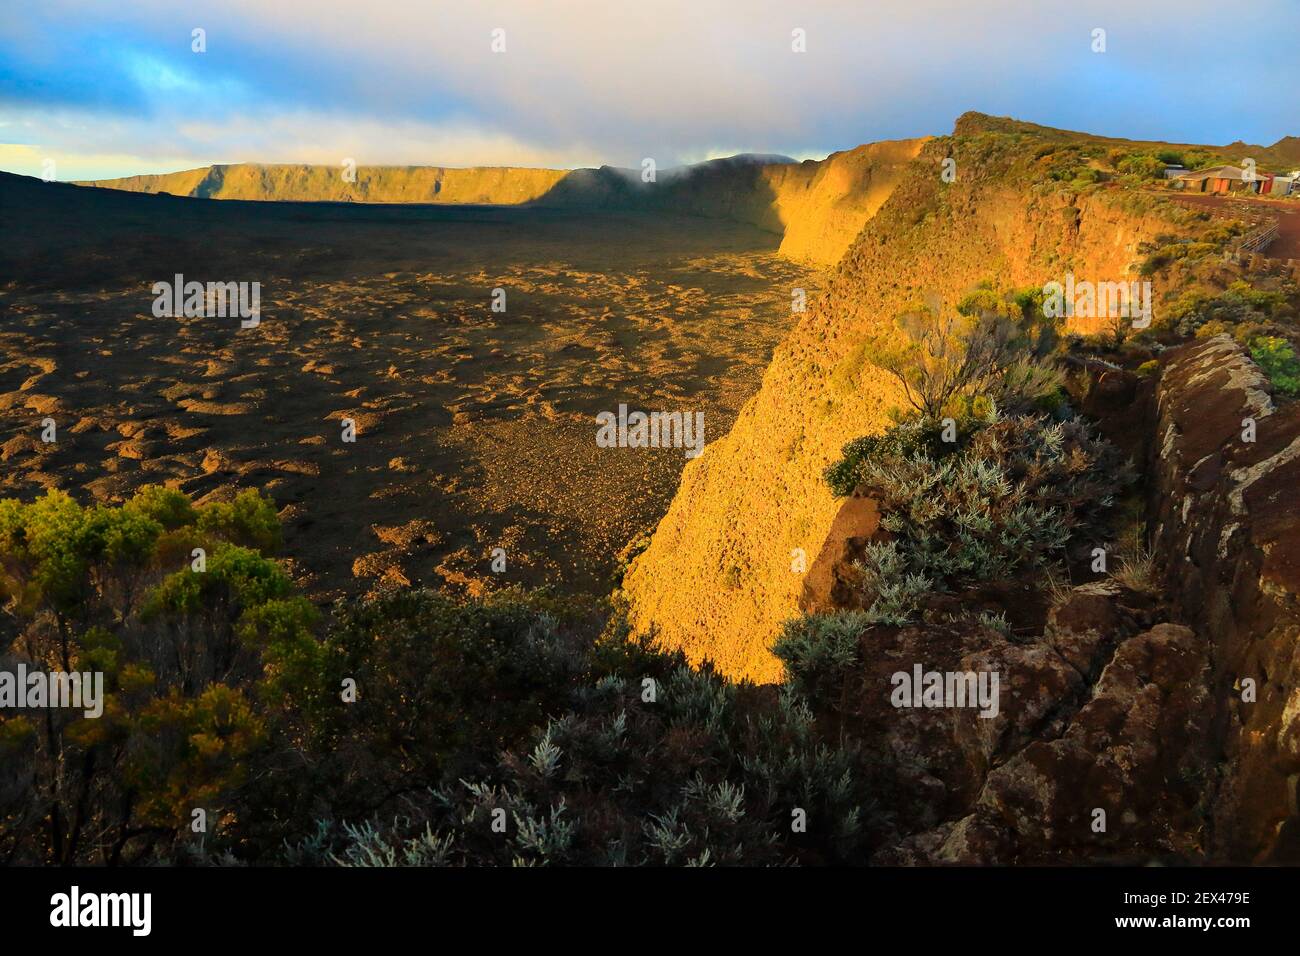 Volcanic landscape of the Piton de la Fournaise, Reunion Island Stock Photo